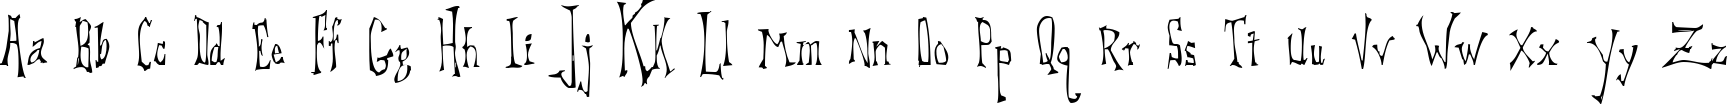 Пример написания английского алфавита шрифтом DreadLox